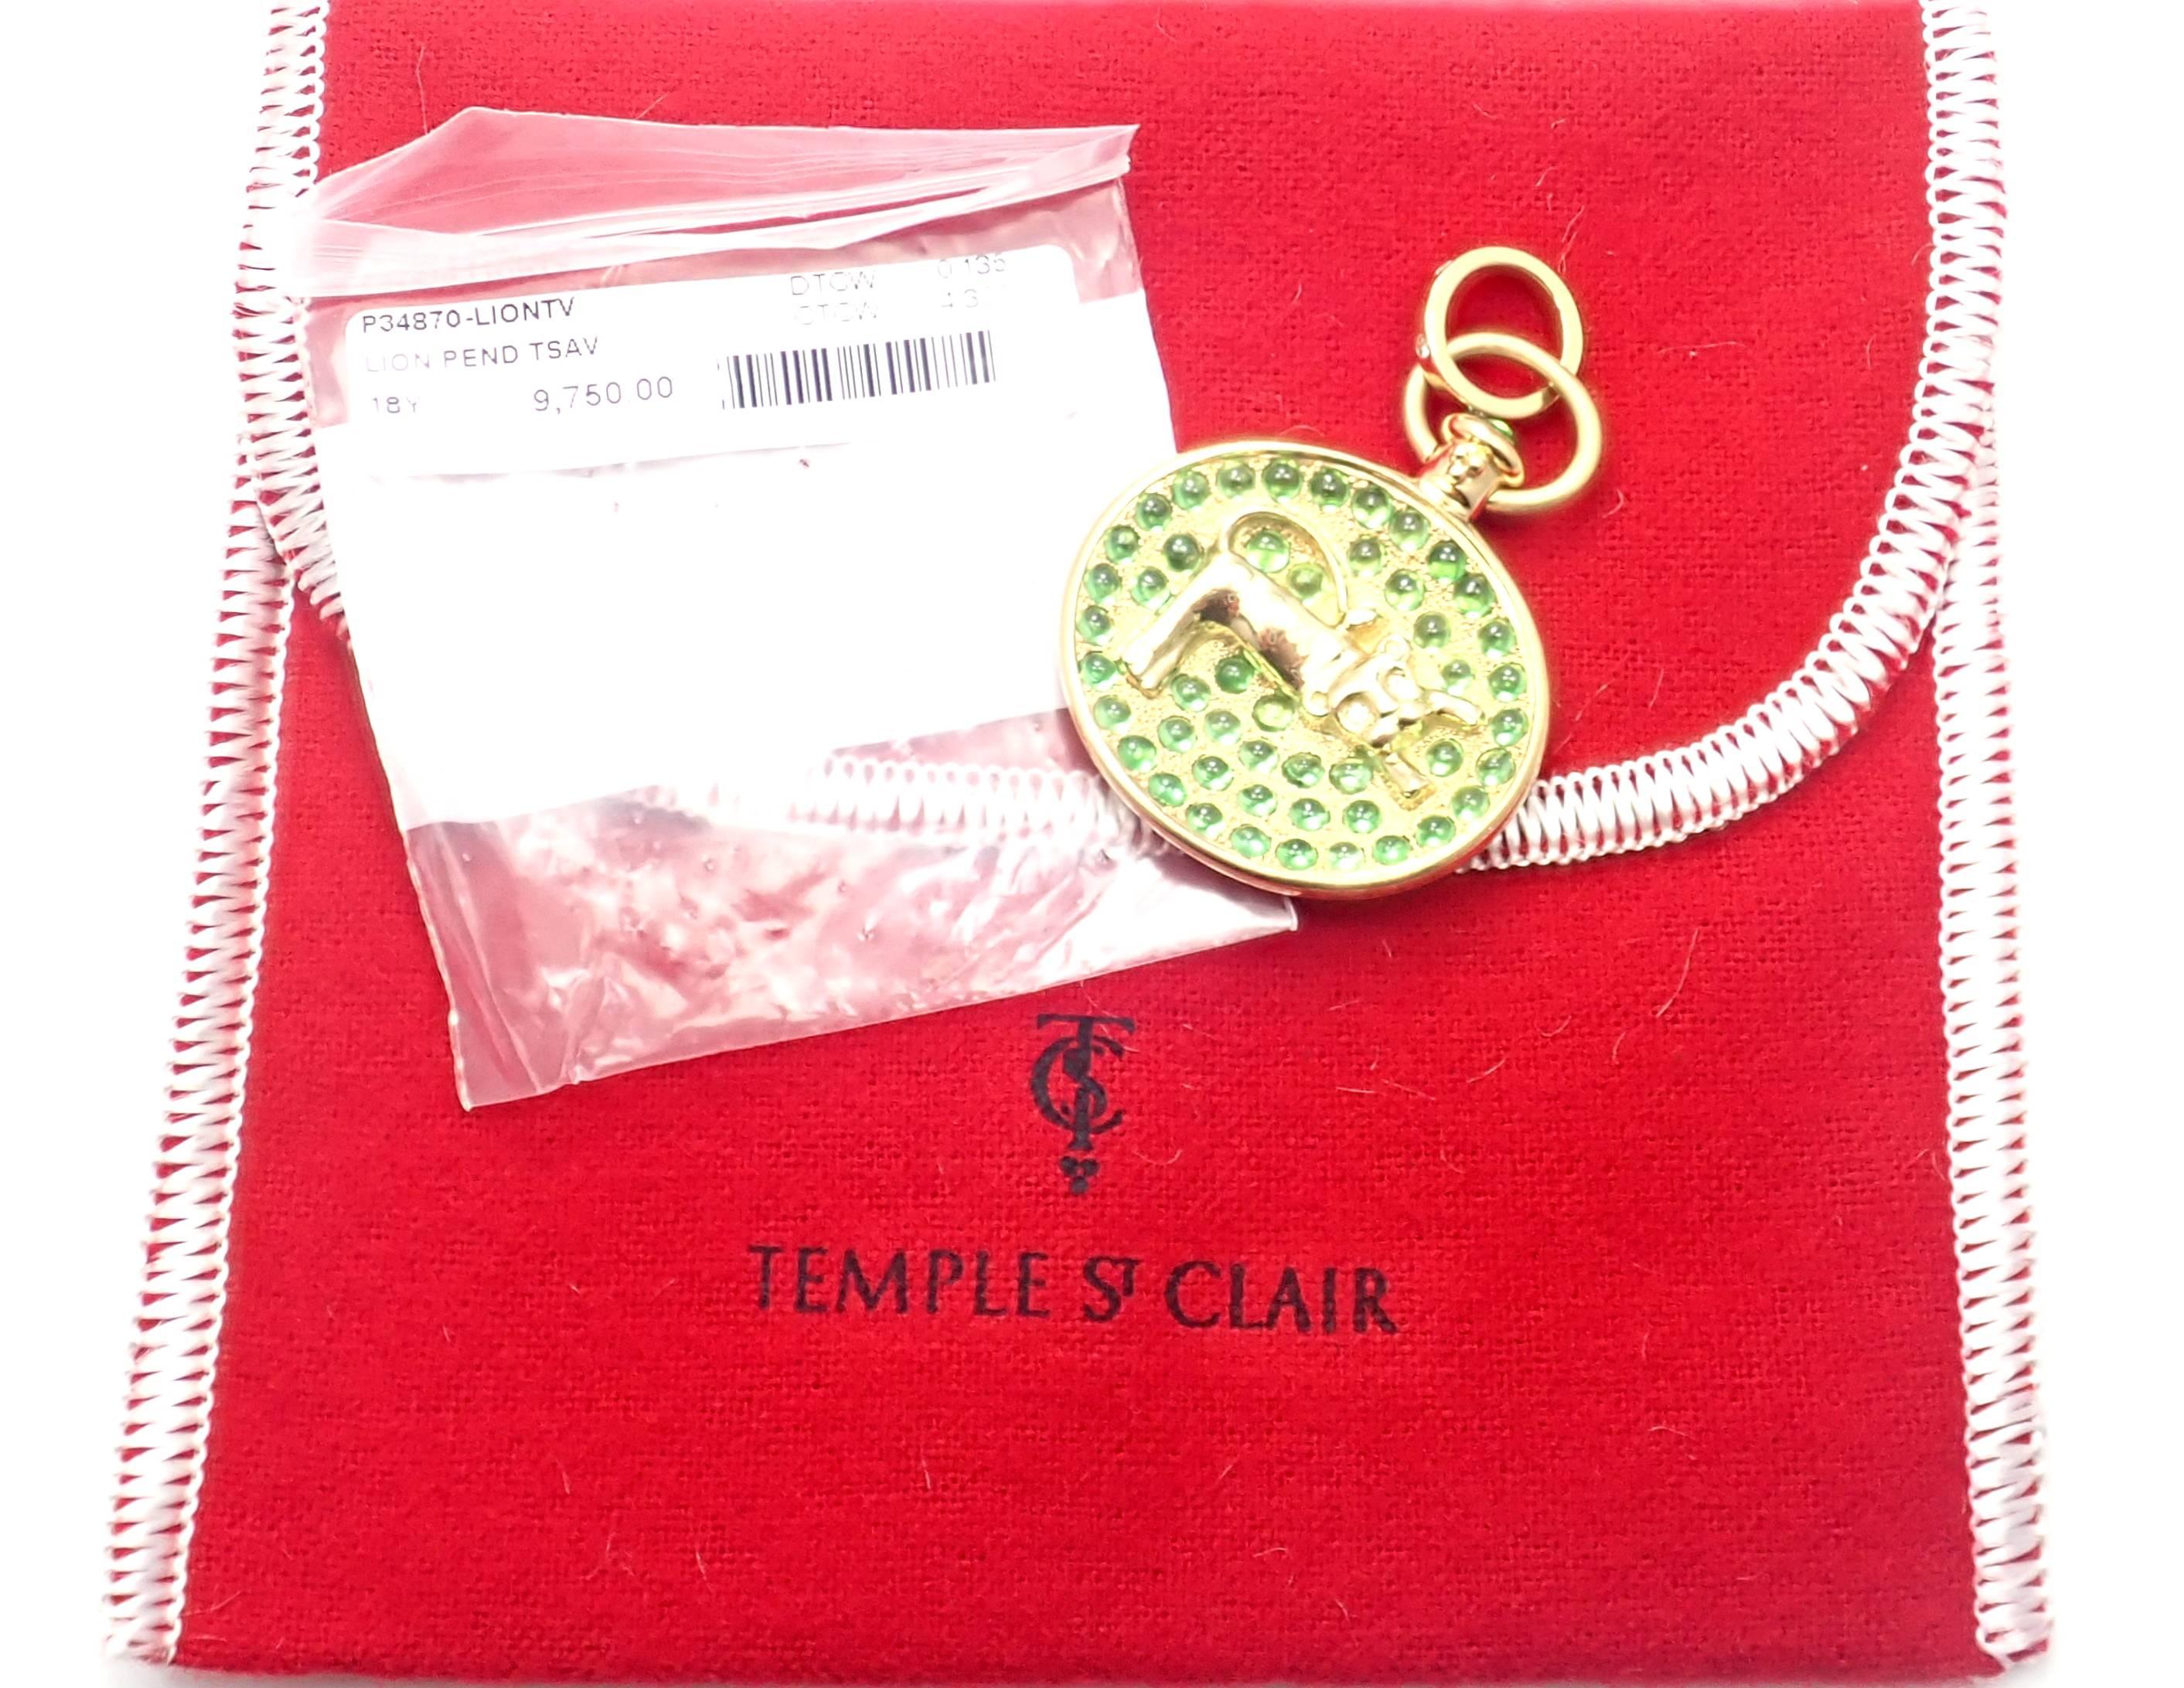 Temple St Clair Diamond Tsavorite Garnet Terrae Lion Yellow Gold Pendant 2